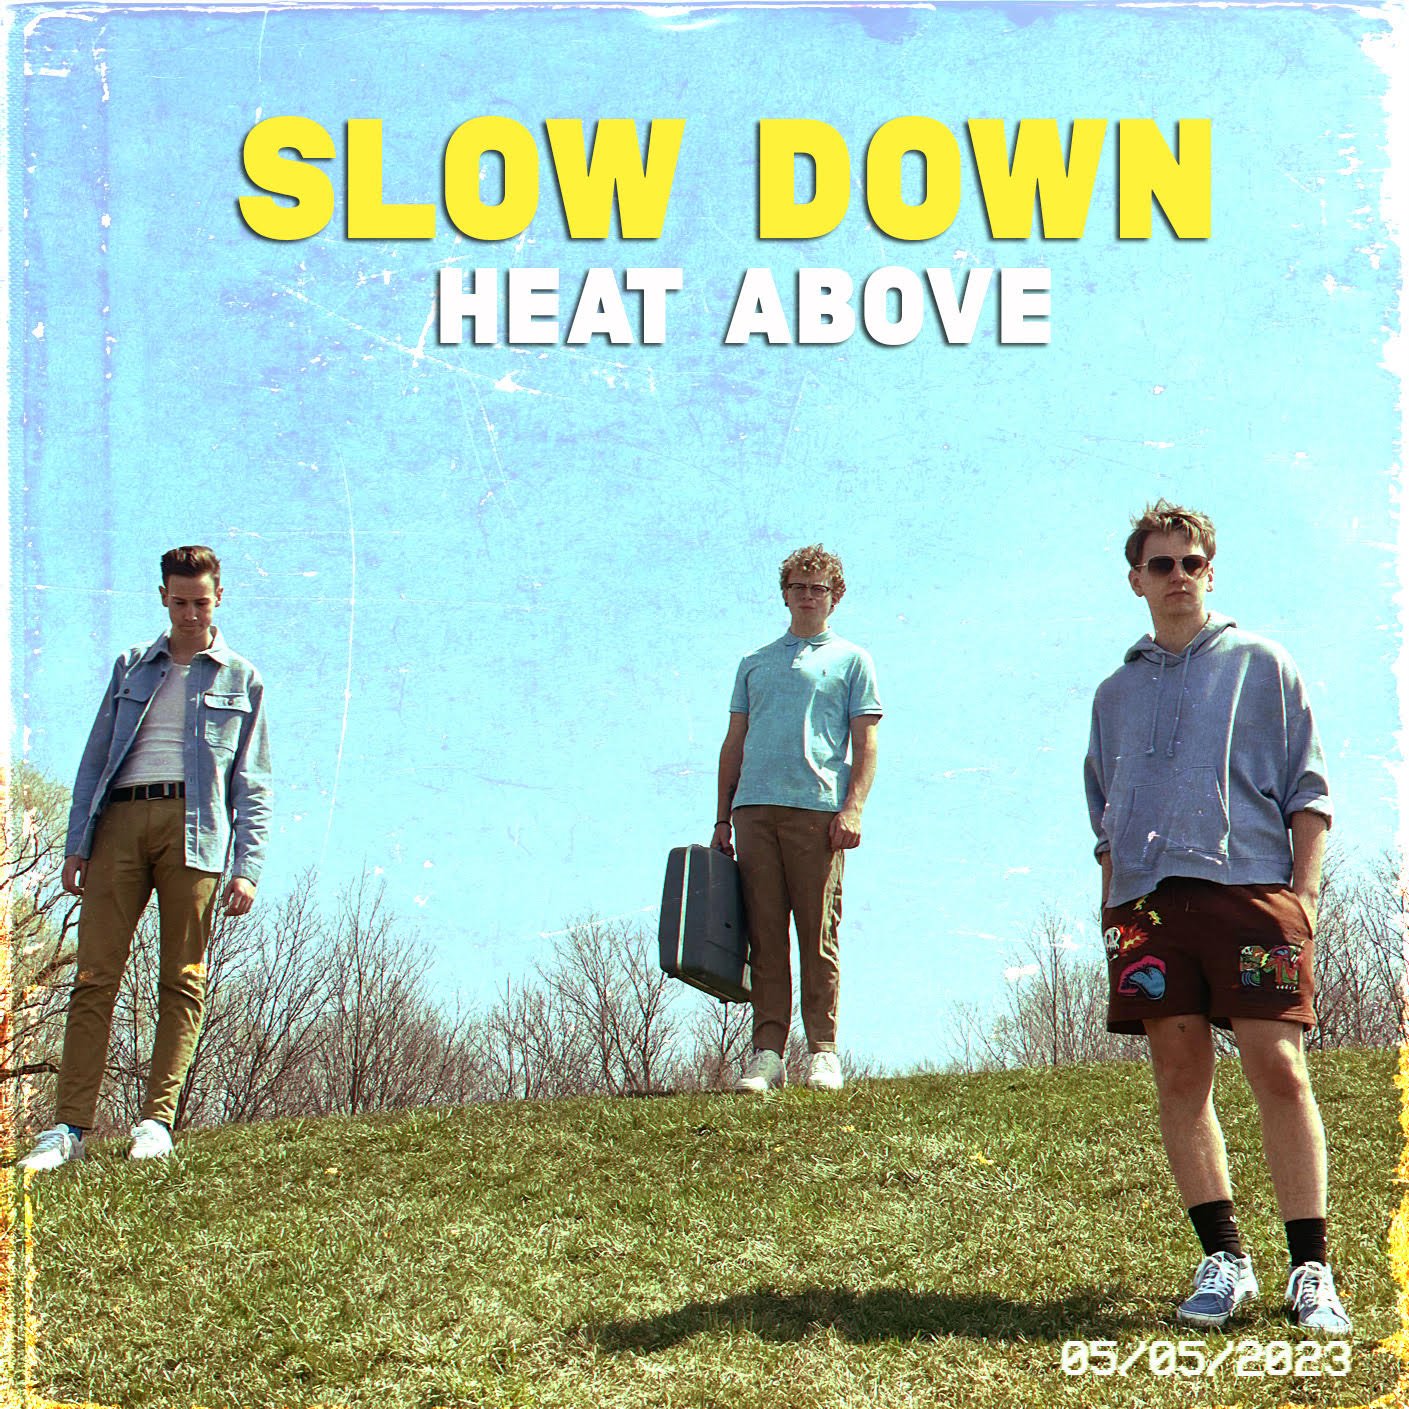 Slow Down - Single